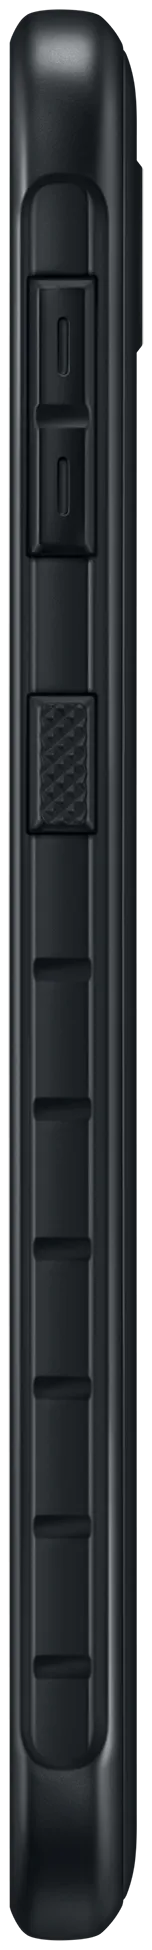 Samsung Galaxy Xcover 5 Enterprise Edition black - 4